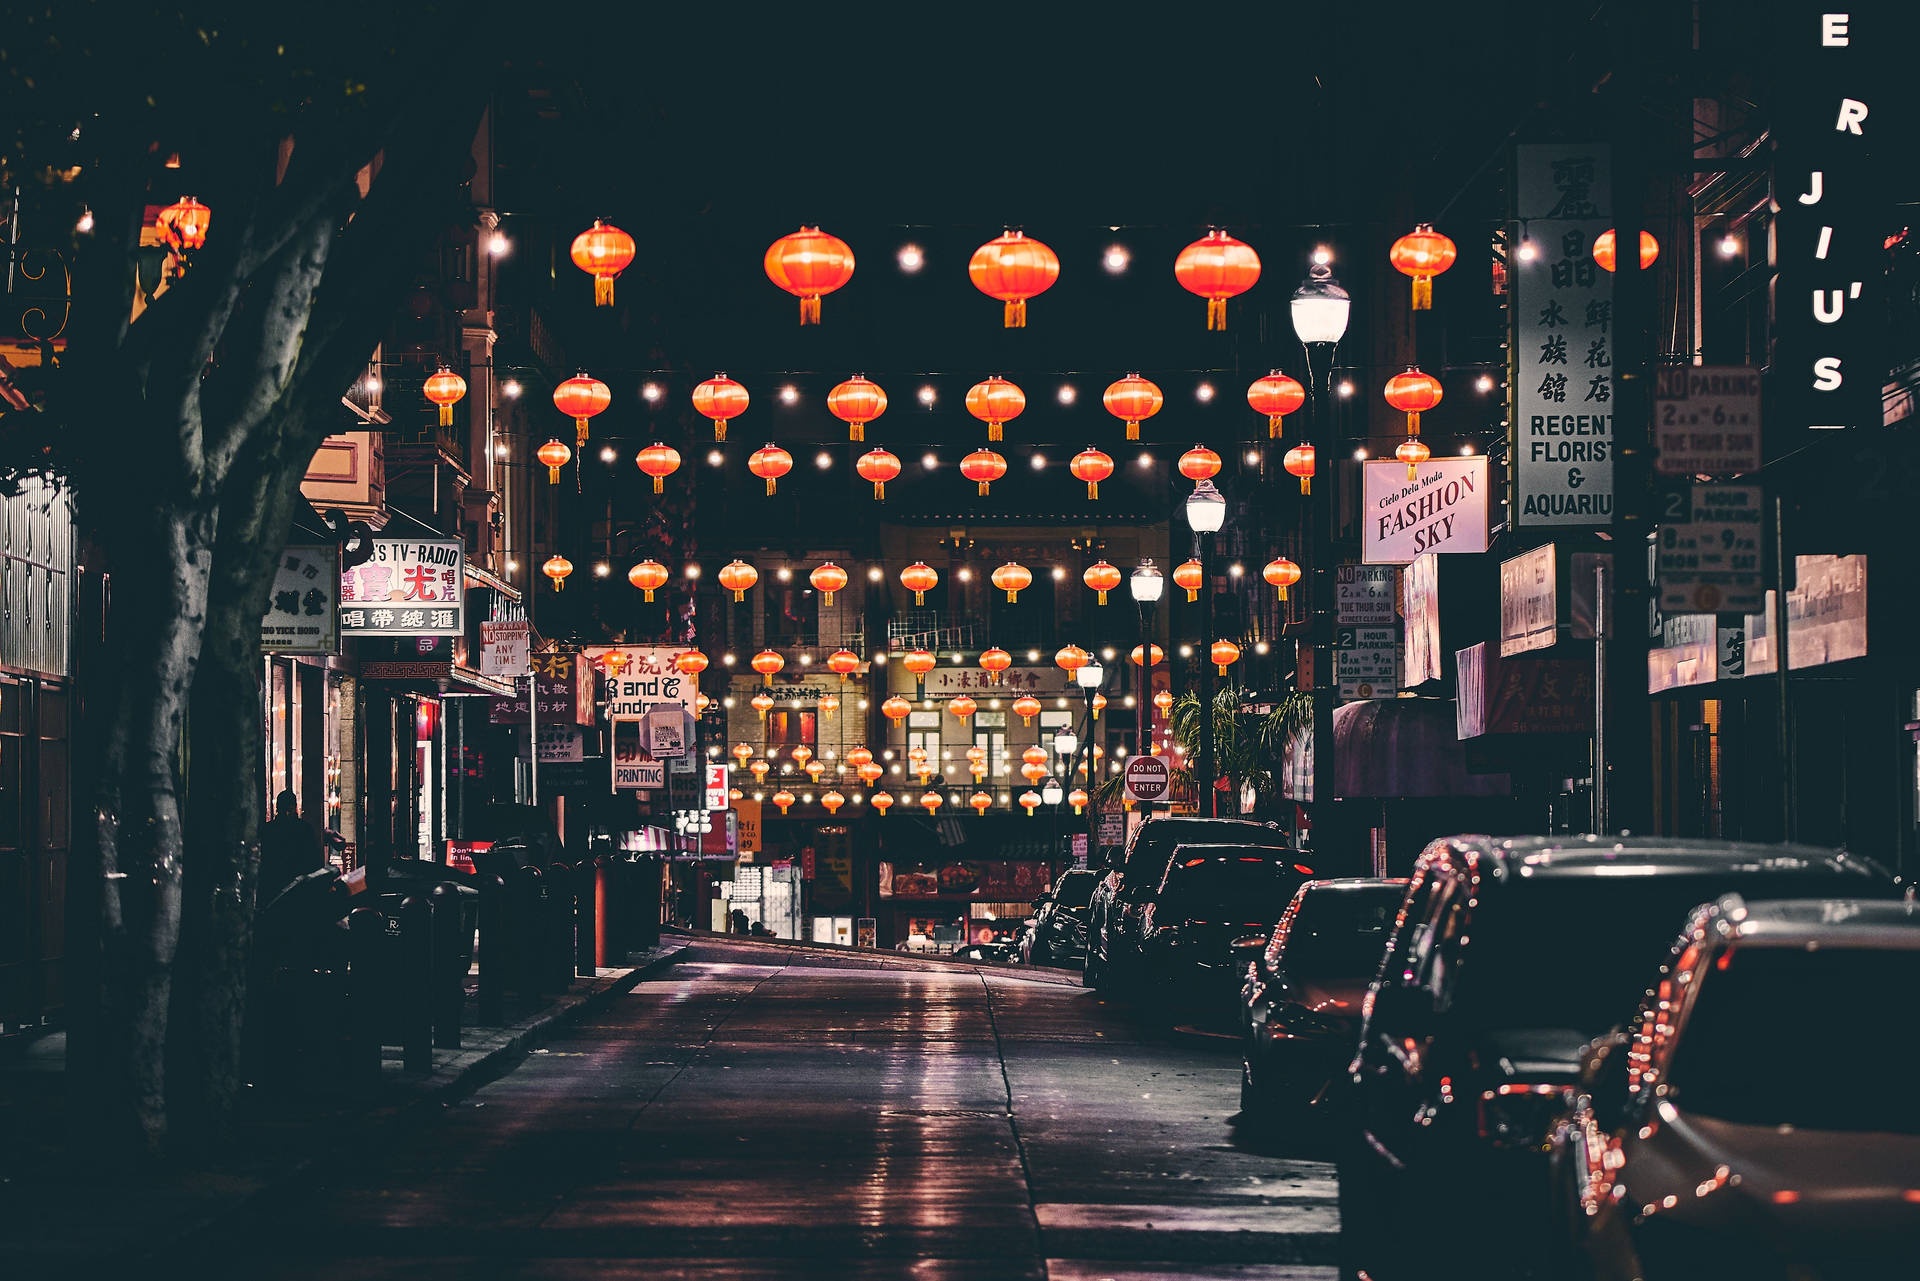 San Francisco Chinatown Lanterns Picture